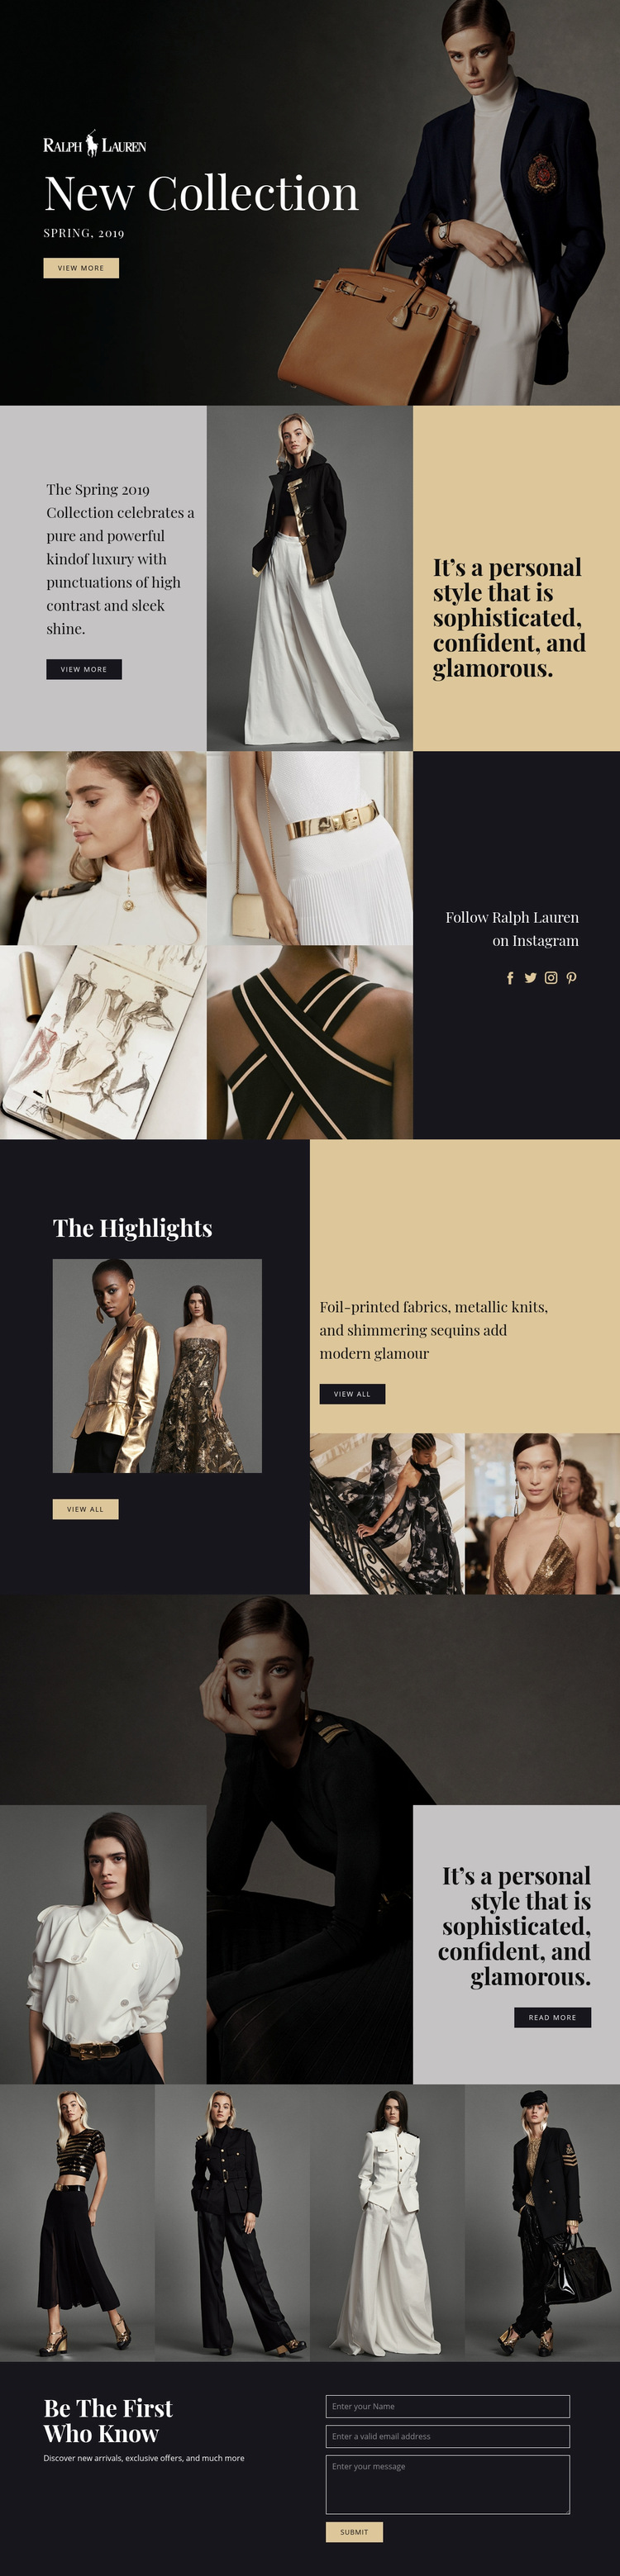 Ralph Lauren fashion Web Page Design